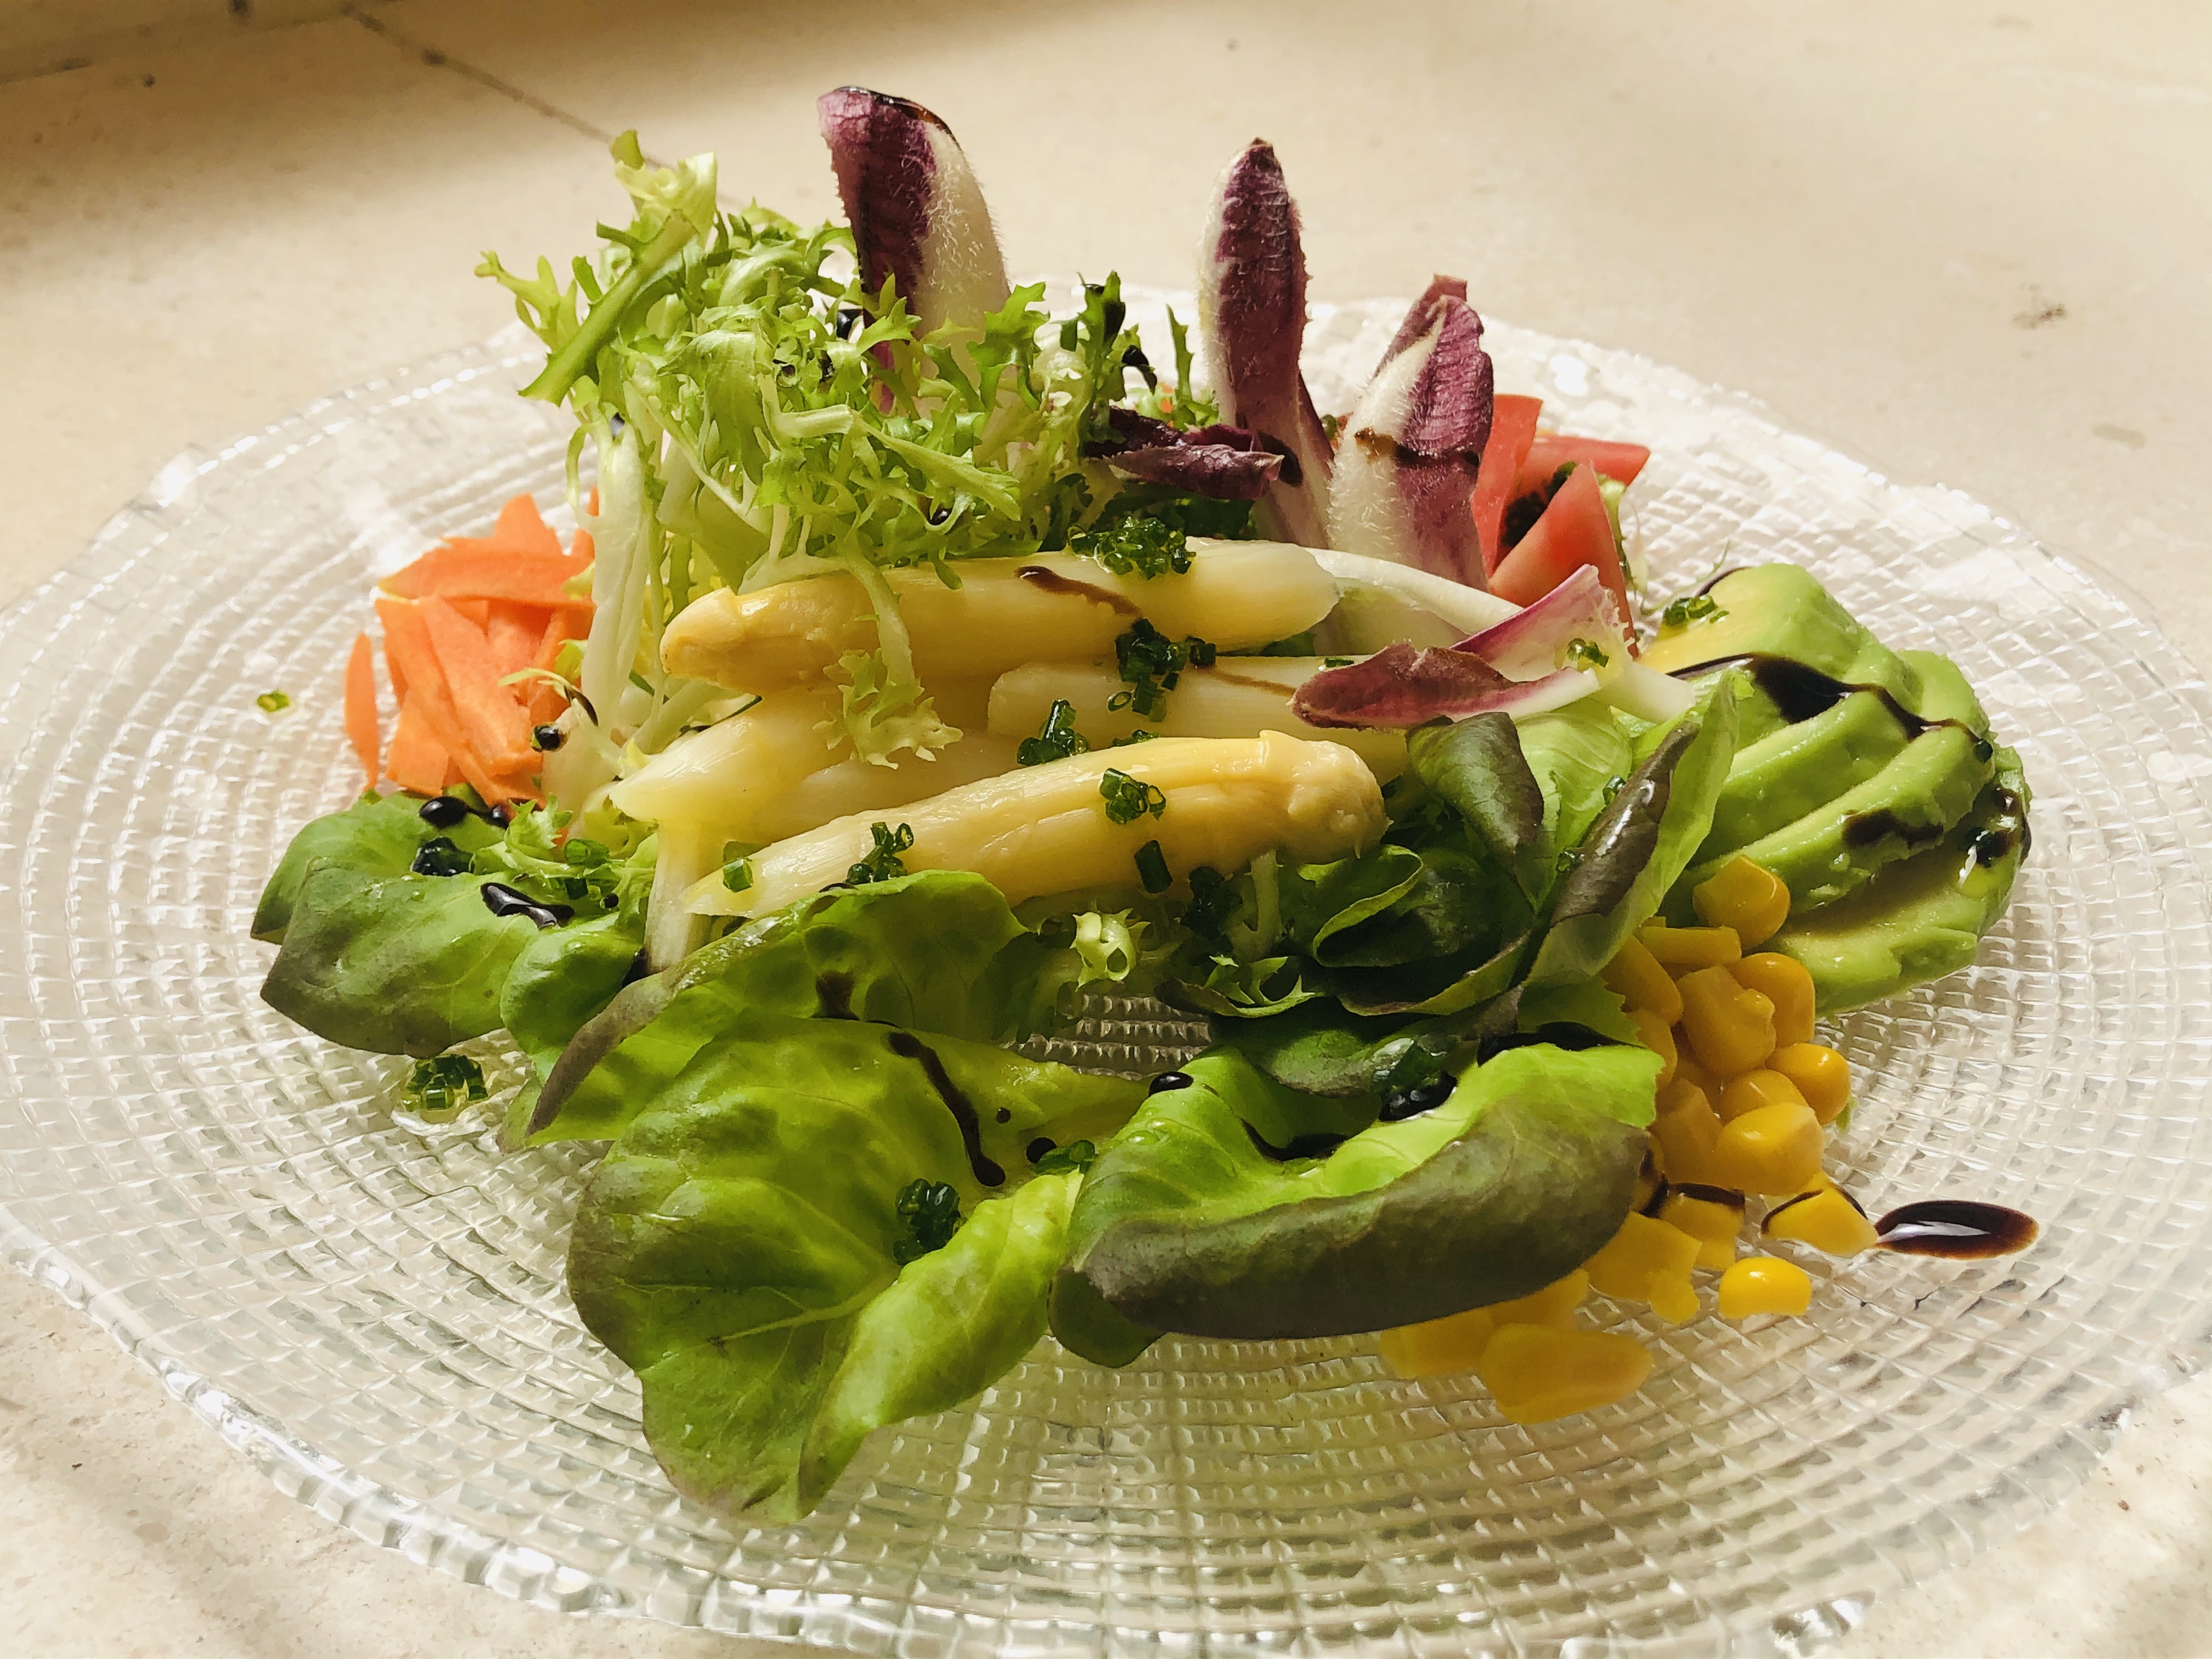 Vegetable salad with chive vinaigrette